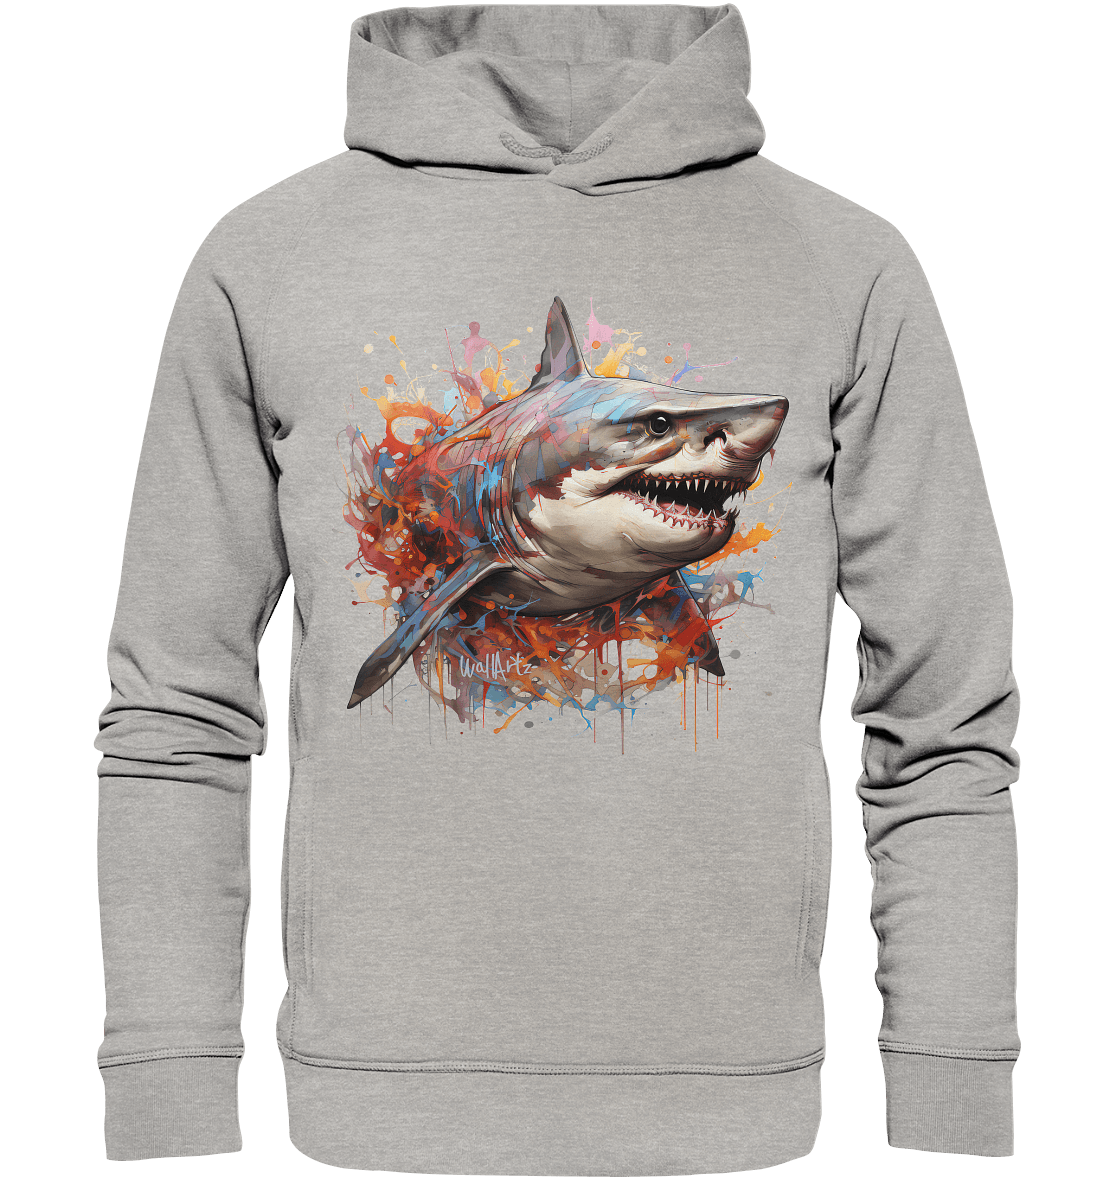 WallArt - shark in a tank - Organic Fashion Hoodie - Snapshirts